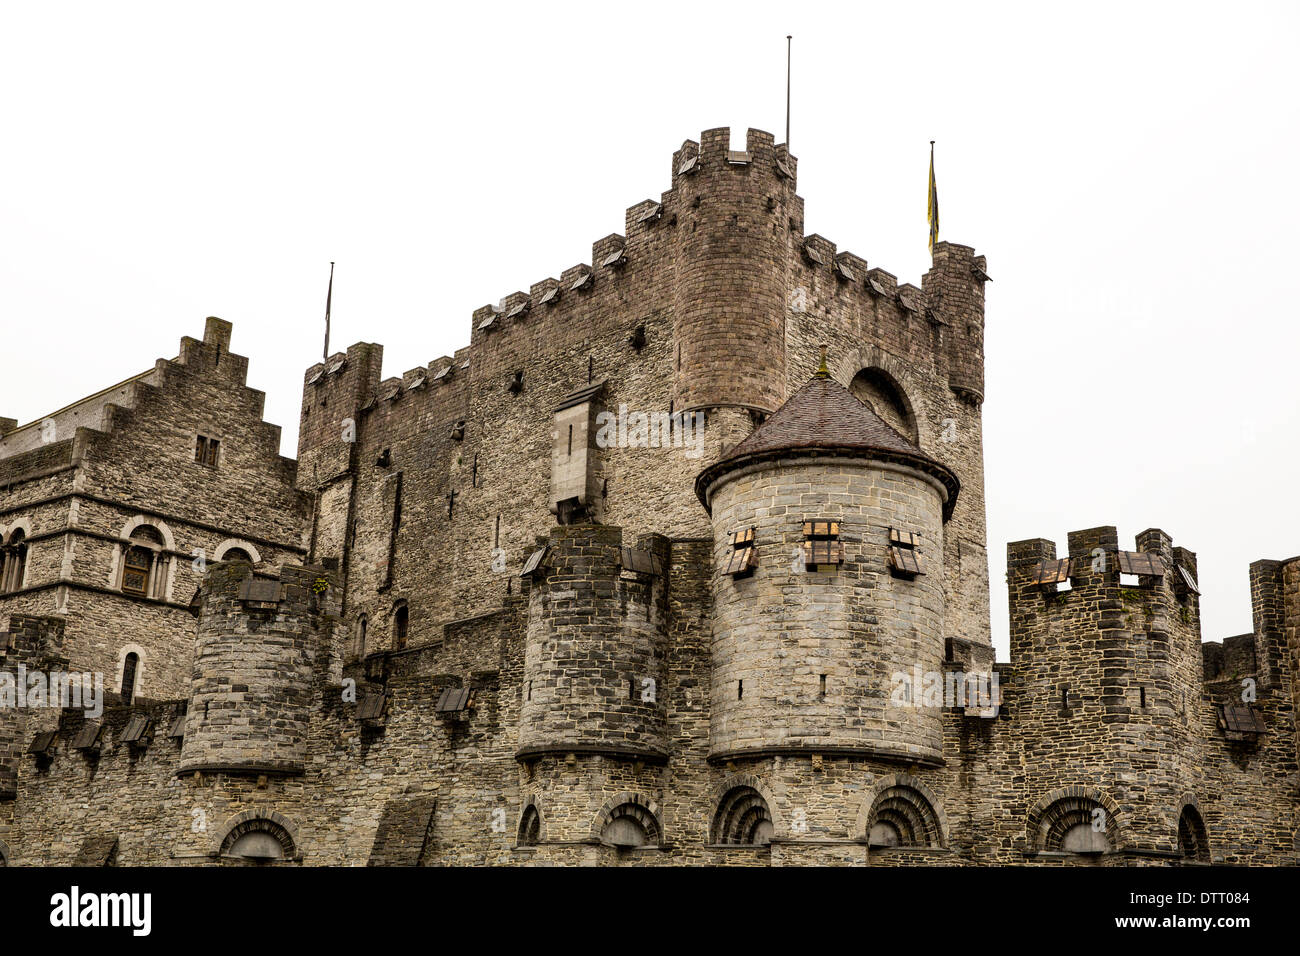 Gravensteen - The Counts of Flanders stone castle in Ghent Belgium. Stock Photo